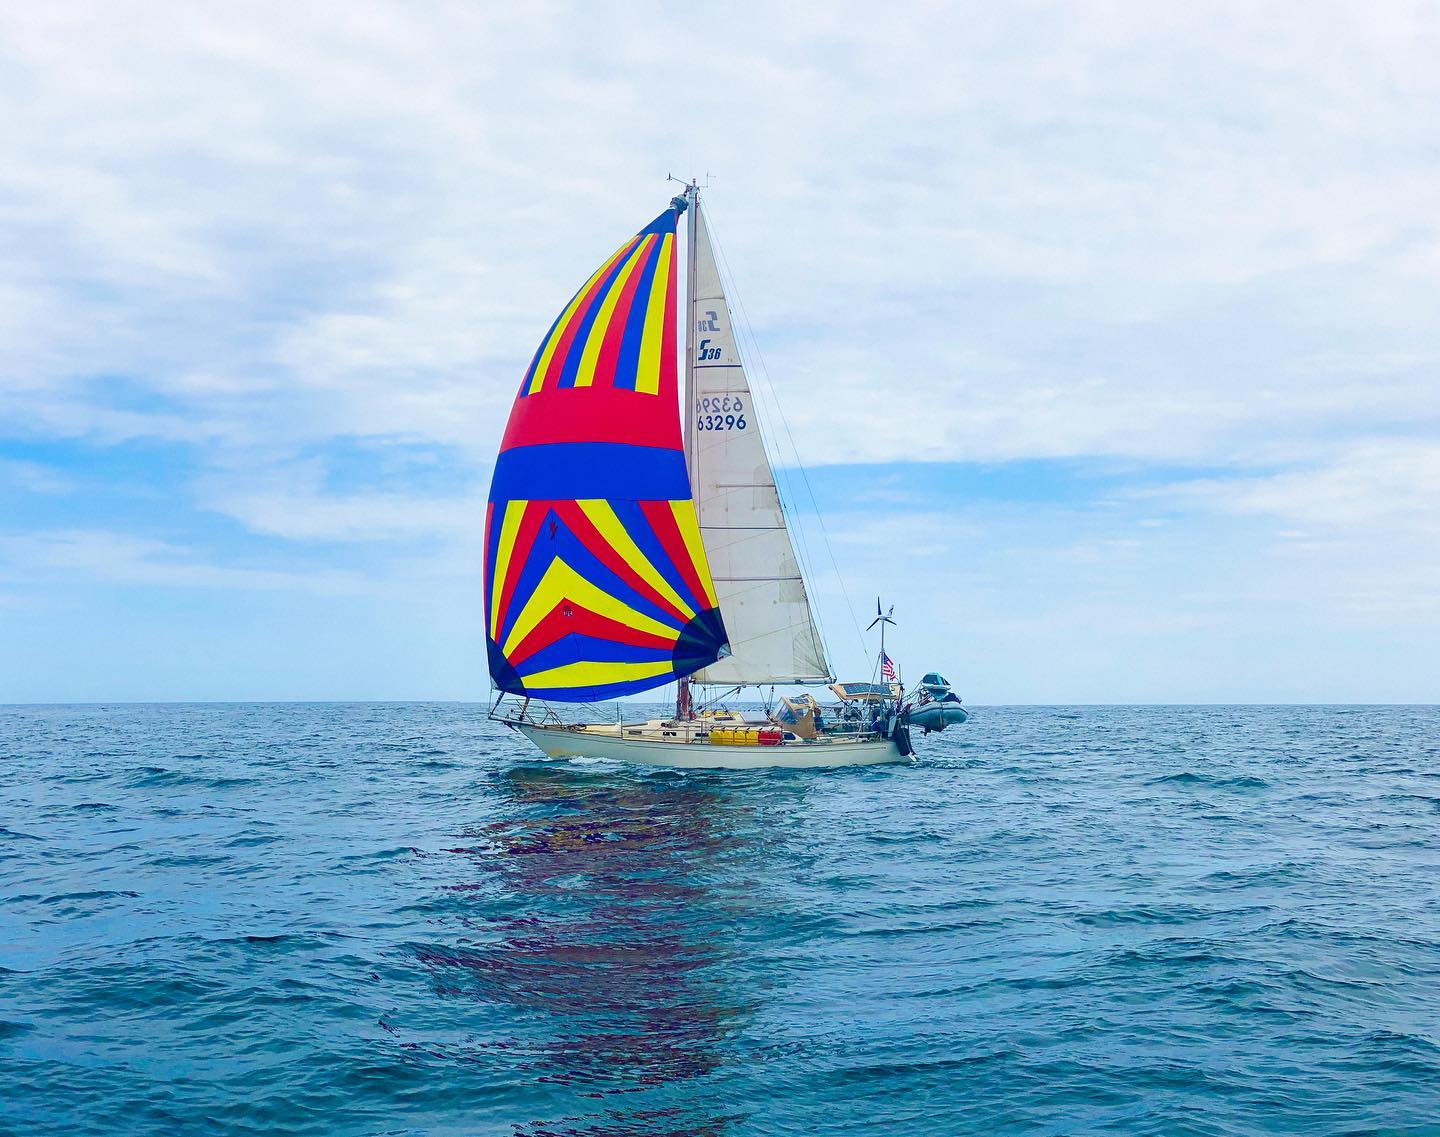 Calico Skies Sailing sailboat on the water